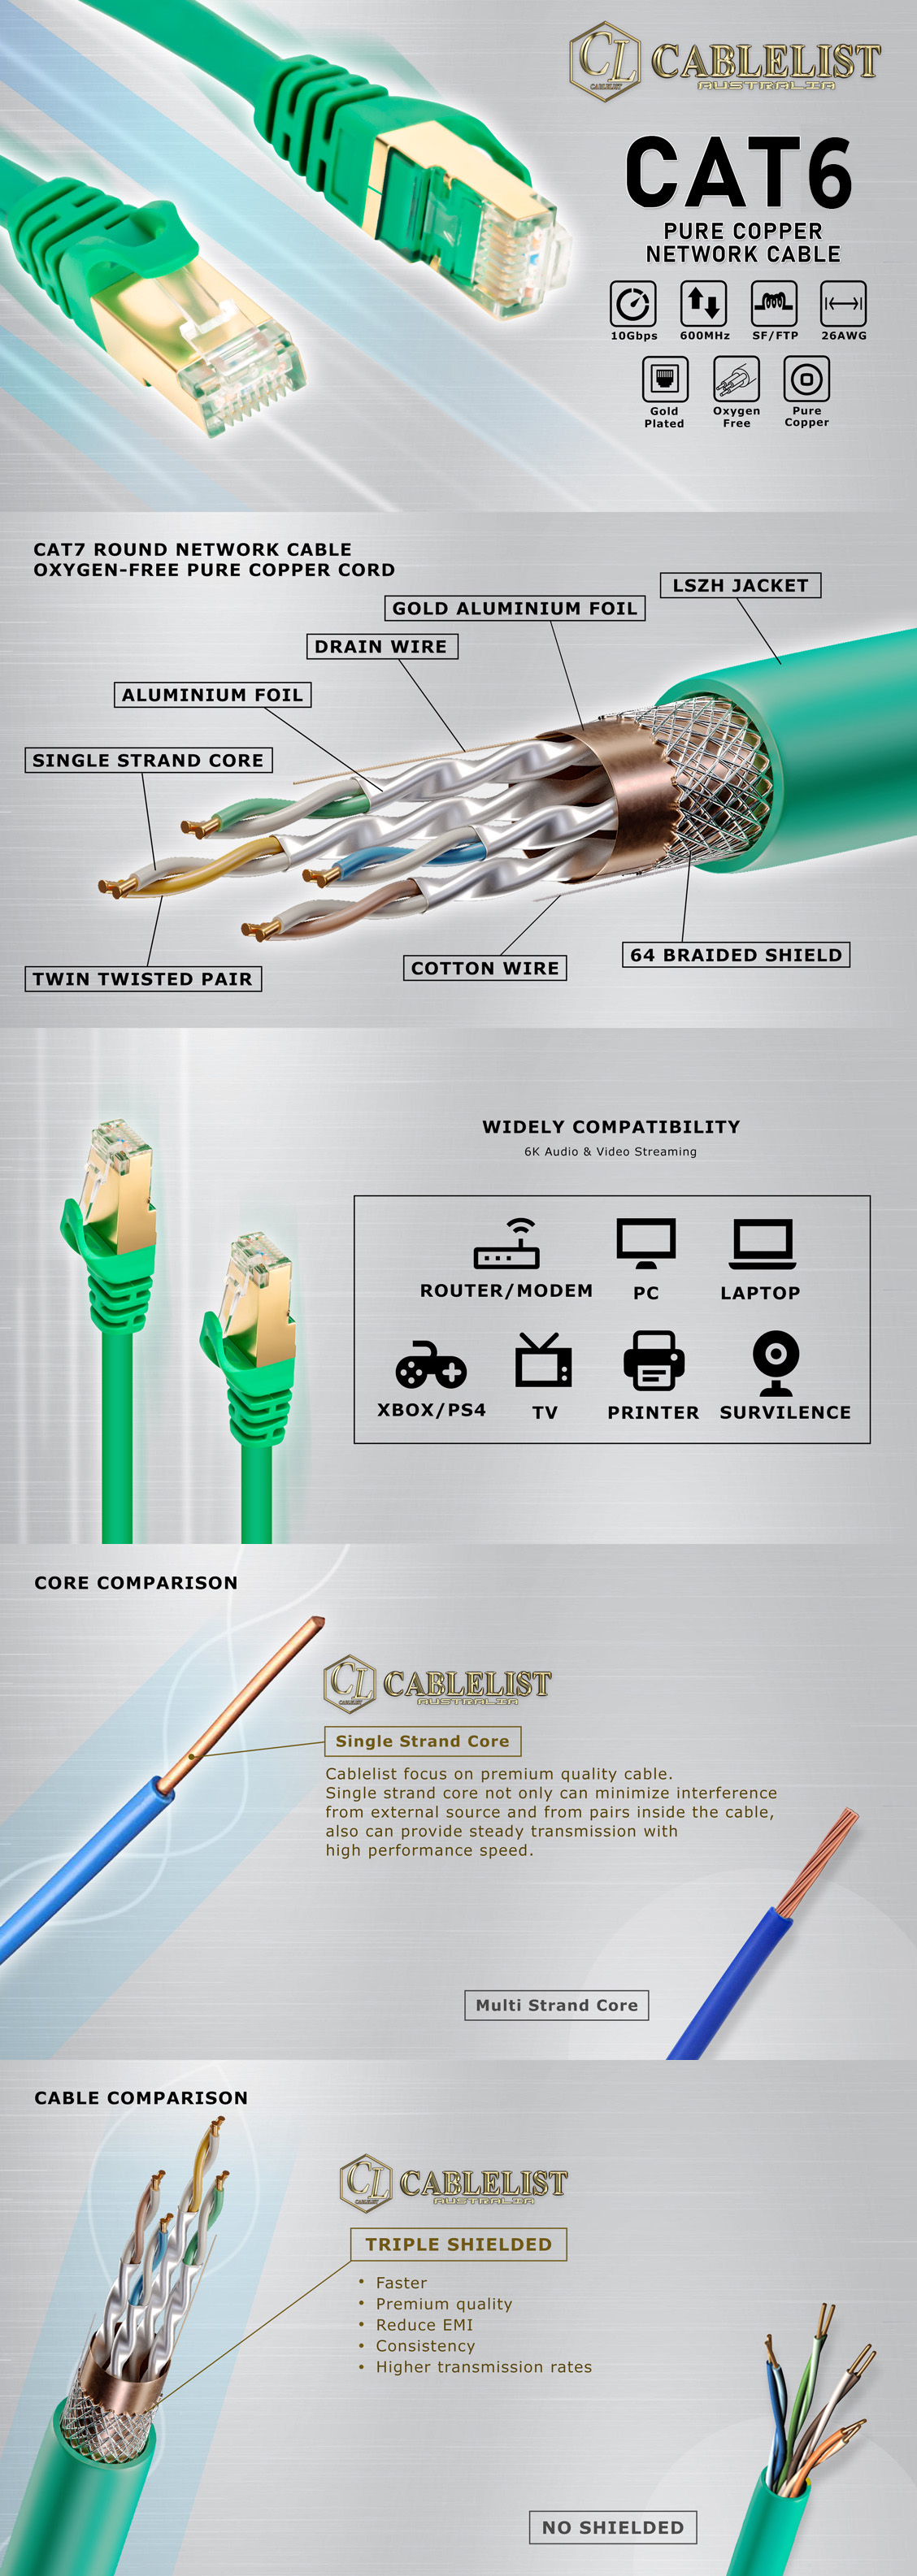 Network-Cables-Cablelist-Cat6-UTP-RJ45-Ethernet-Network-Cable-25cm-Green-2